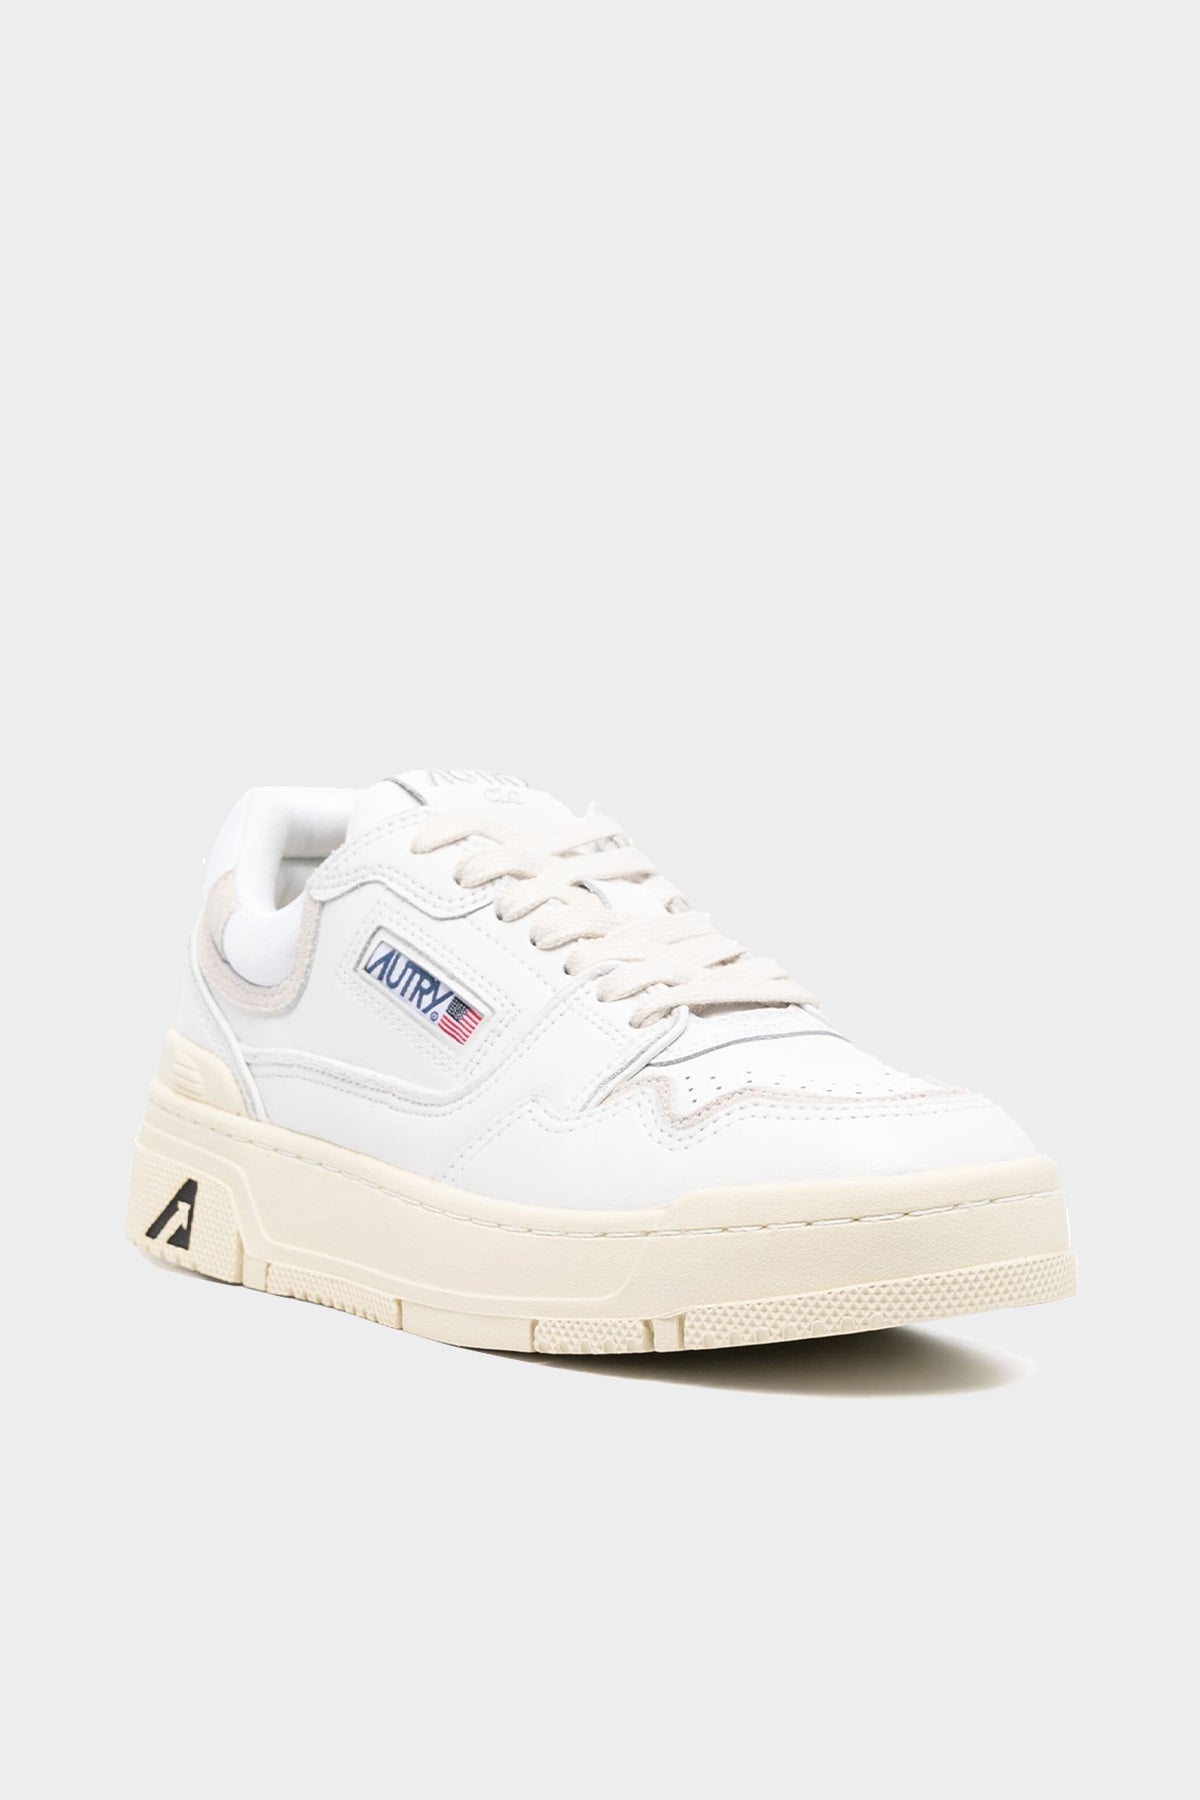 CLC Leather Sneaker in White - shop-olivia.com